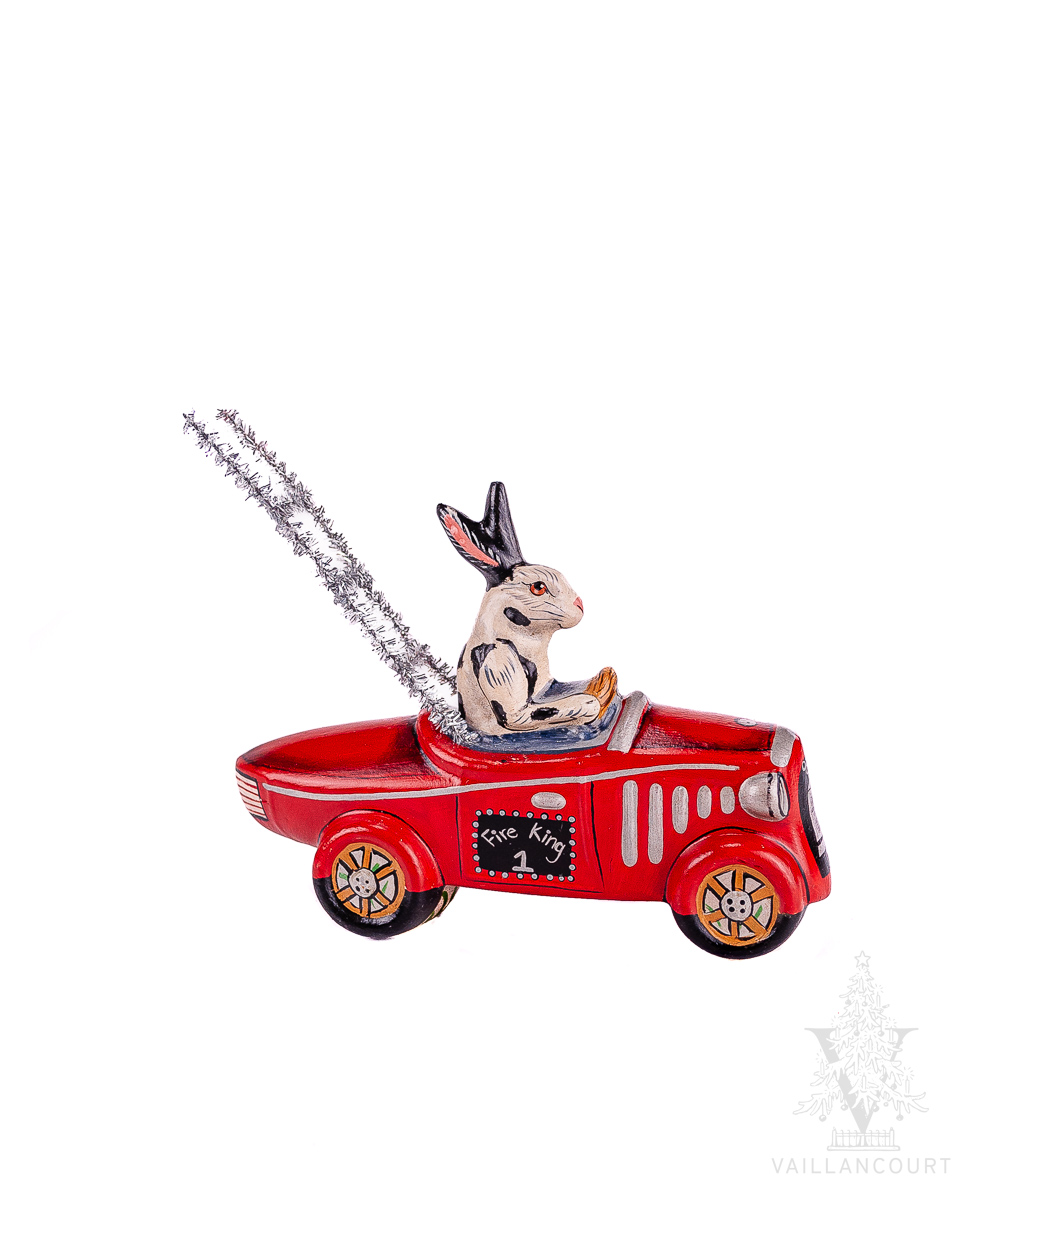 Parade Rabbit Driving Firetruck from Vaillancourt